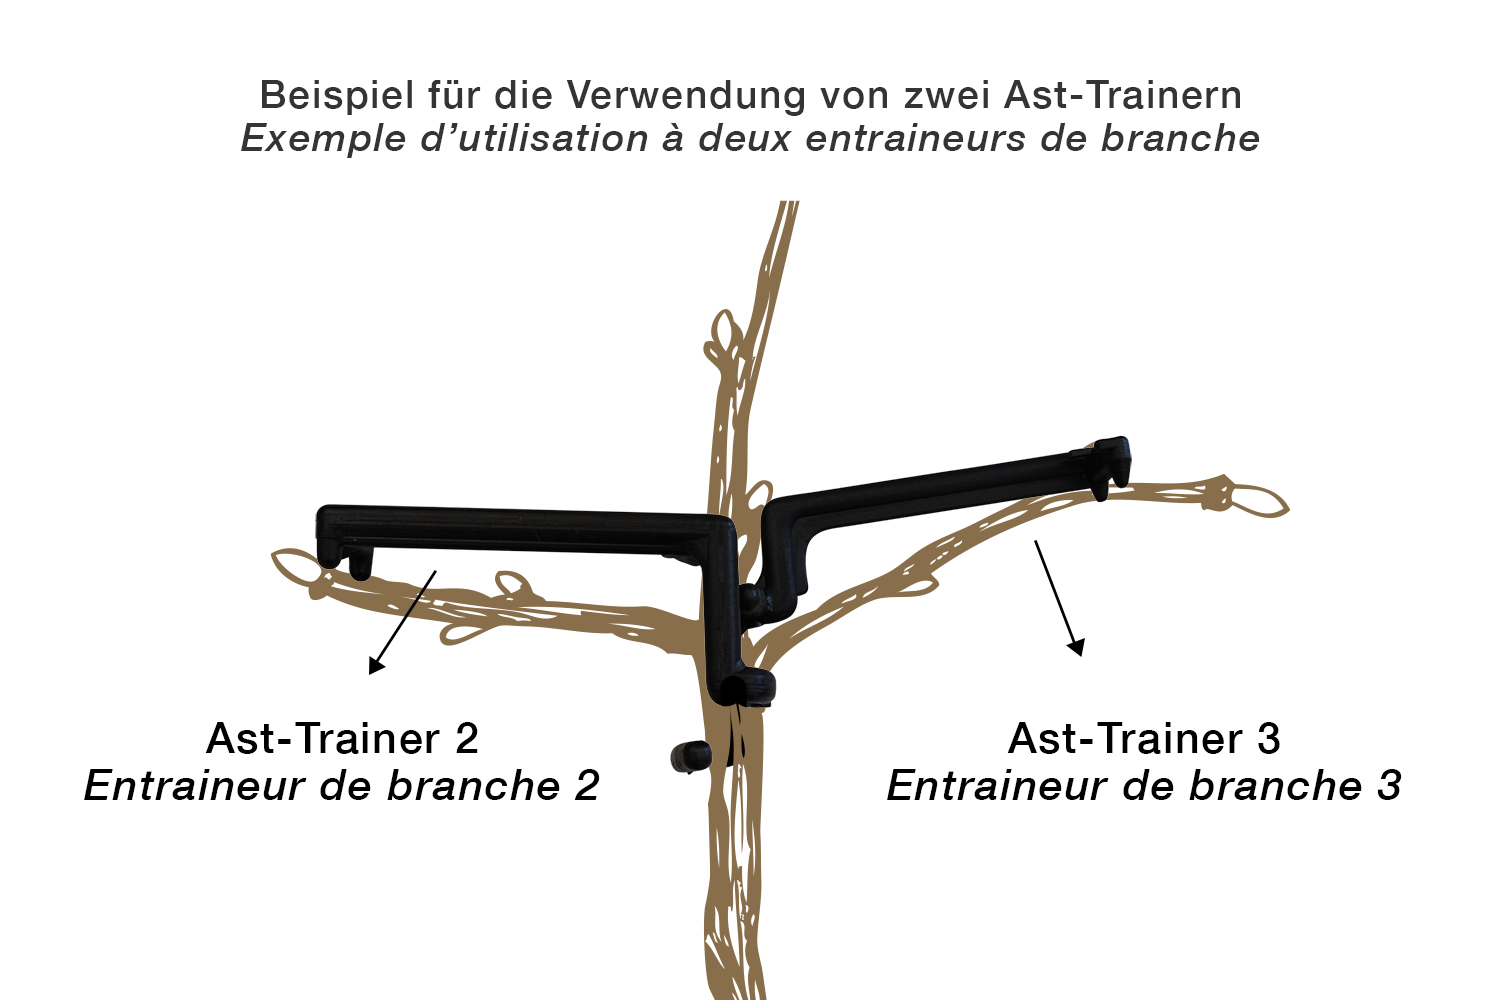 Ast-Trainer 2